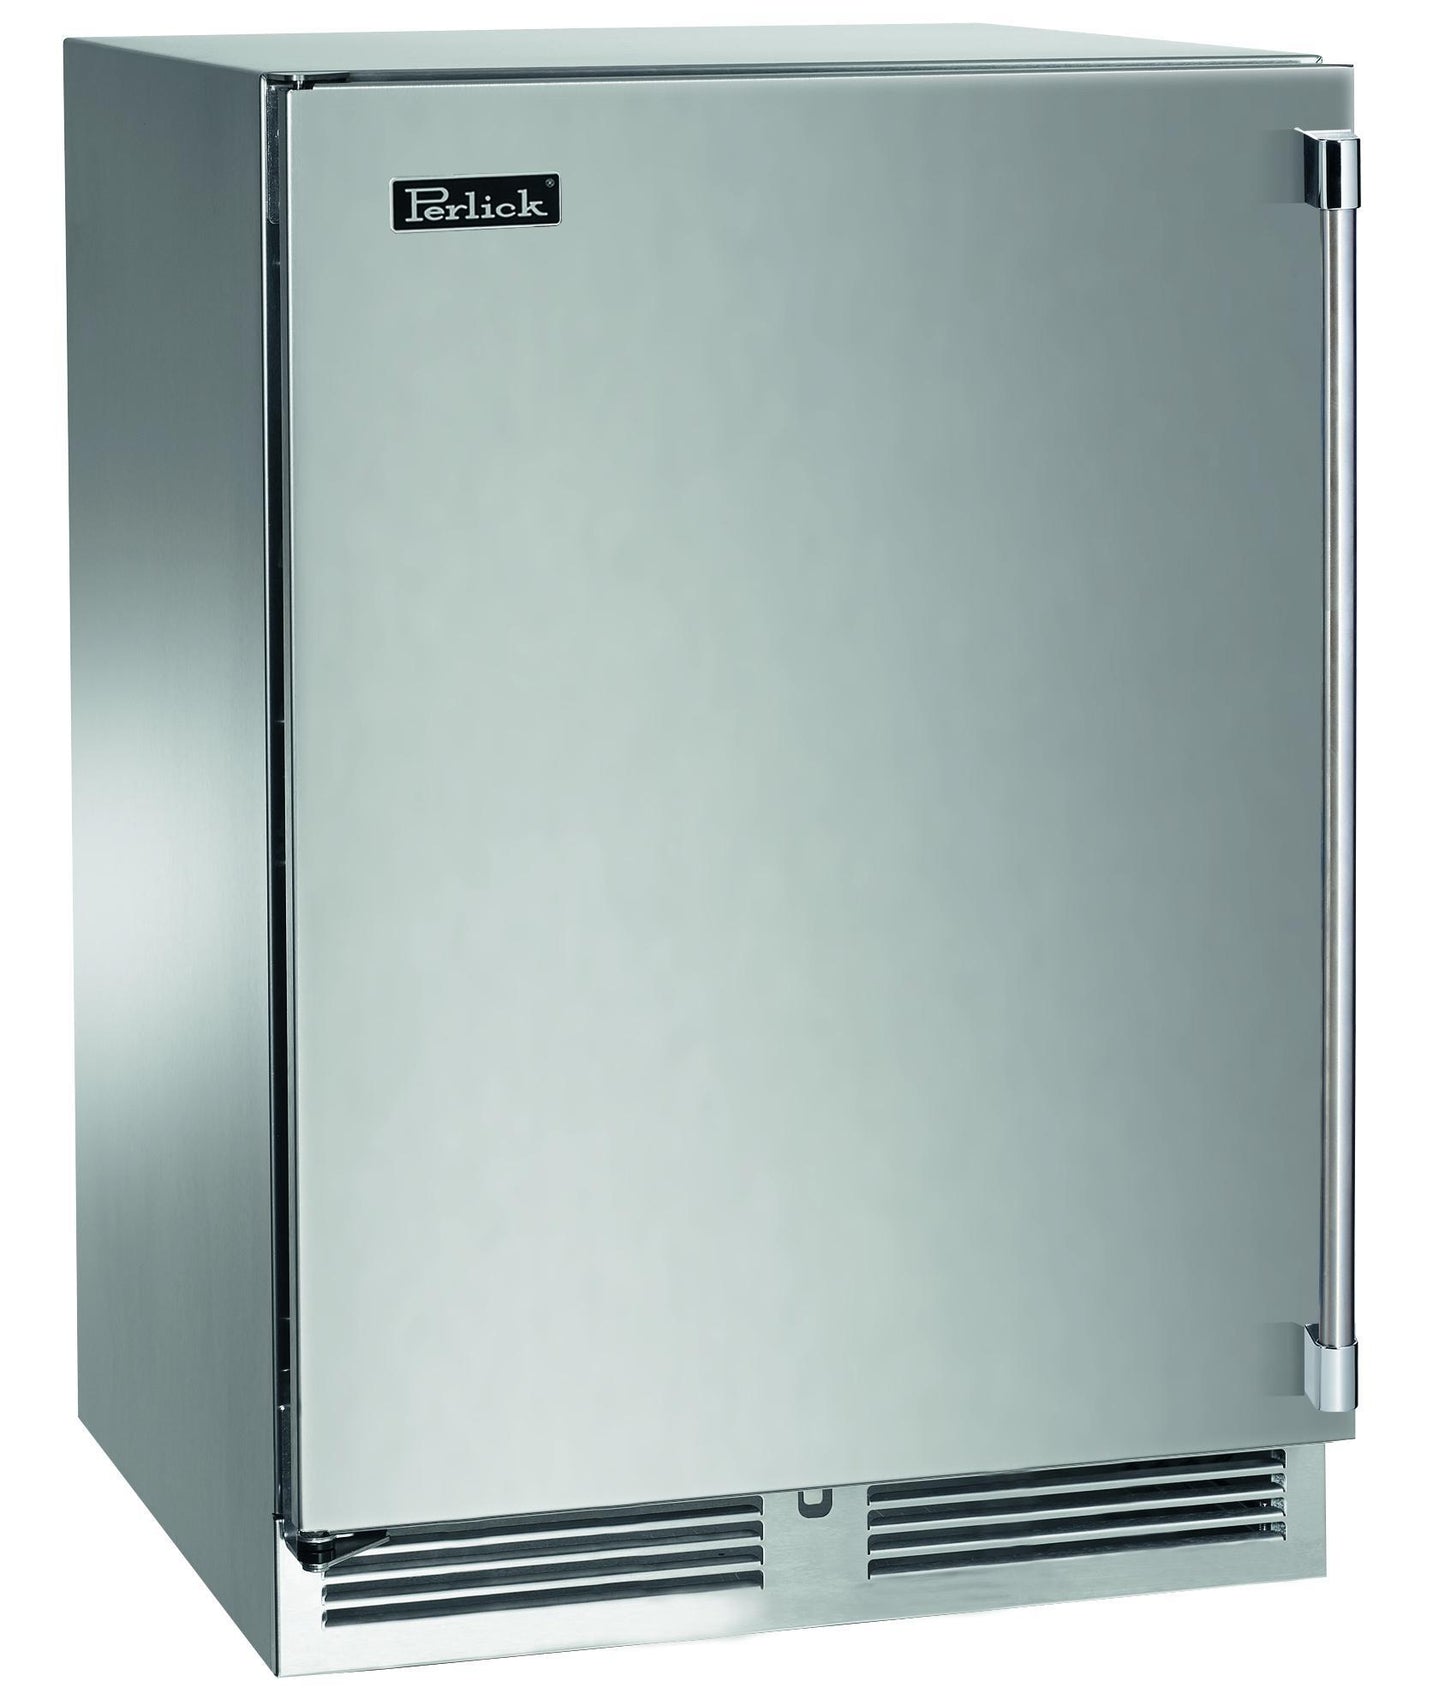 Perlick HP24RS41L 24" Undercounter Refrigerator